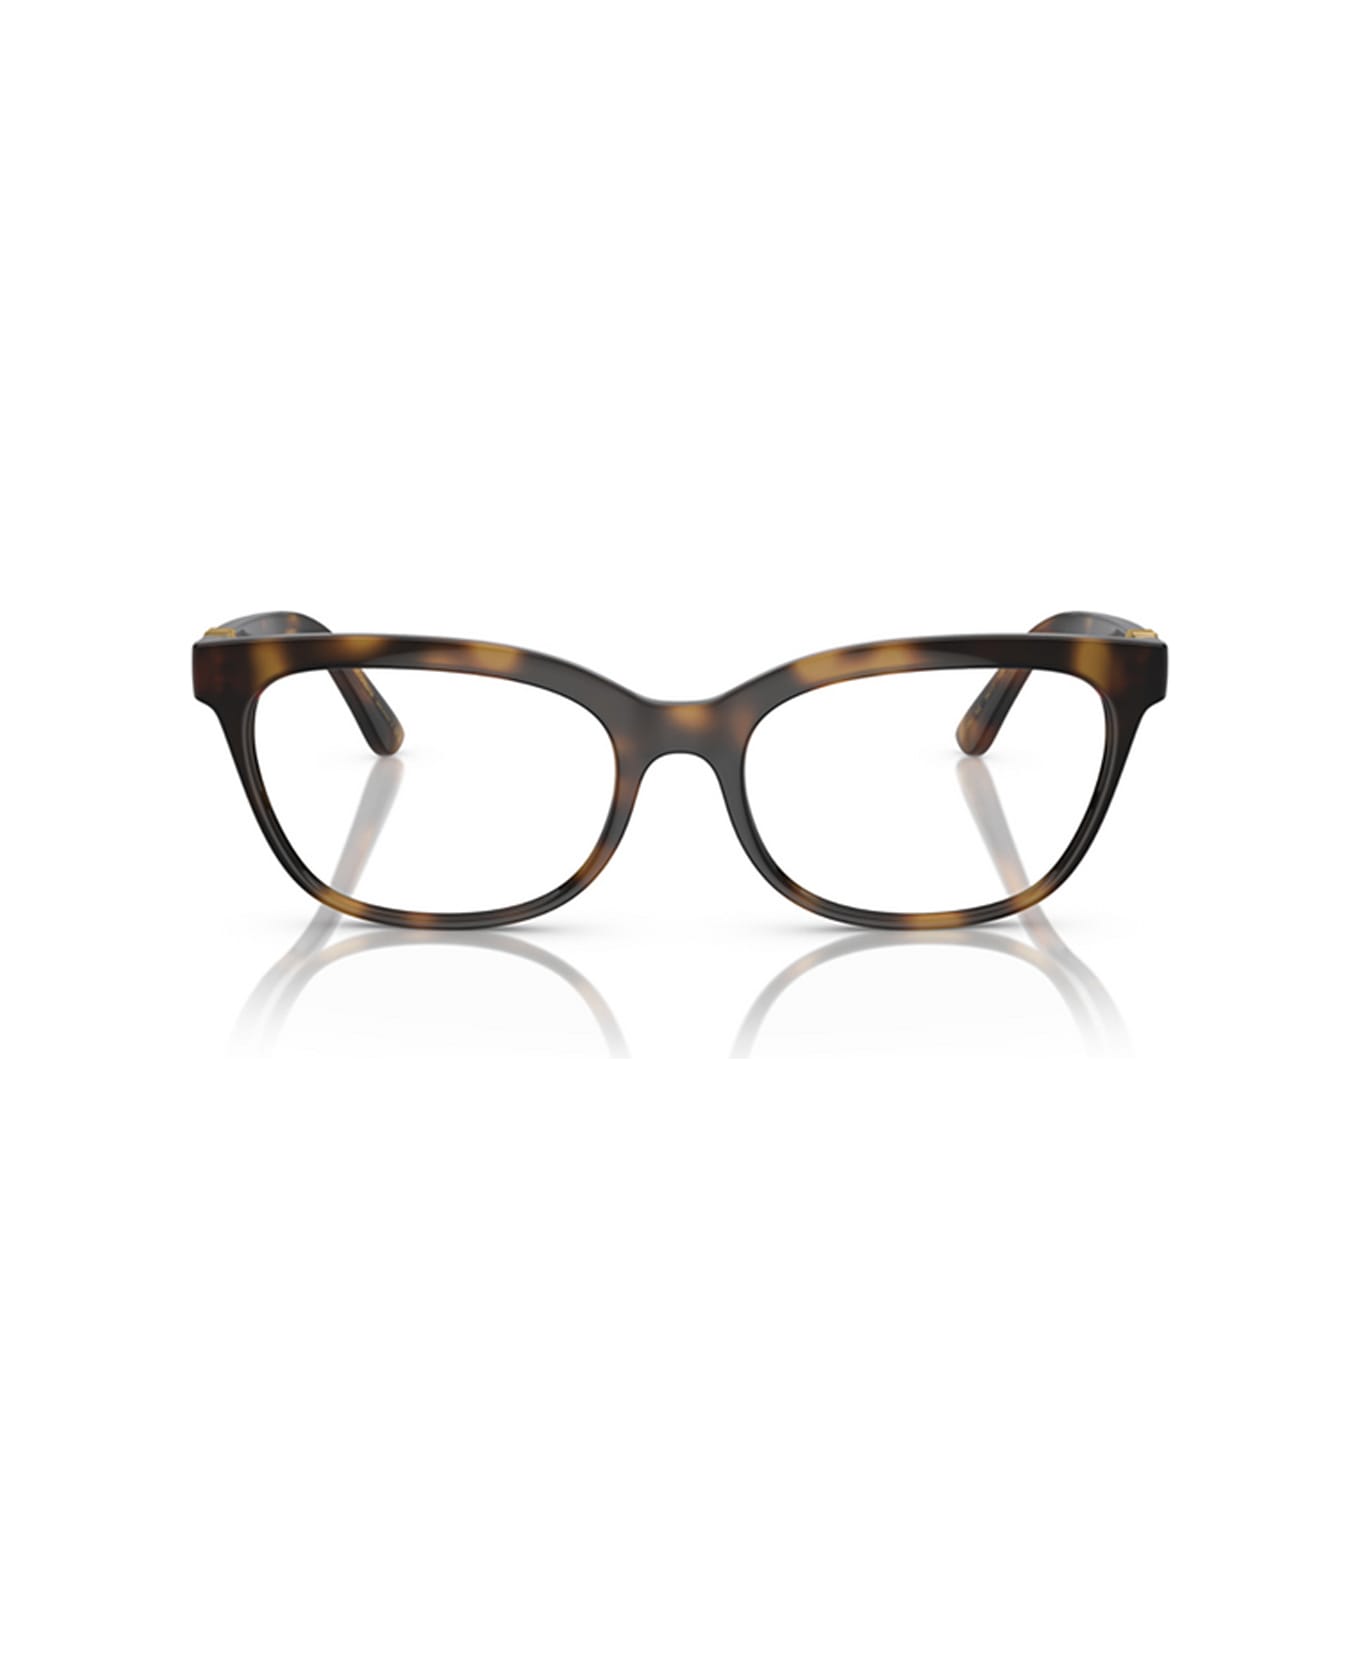 Dolce & Gabbana Eyewear Dg5106u 502 Glasses - Marrone アイウェア